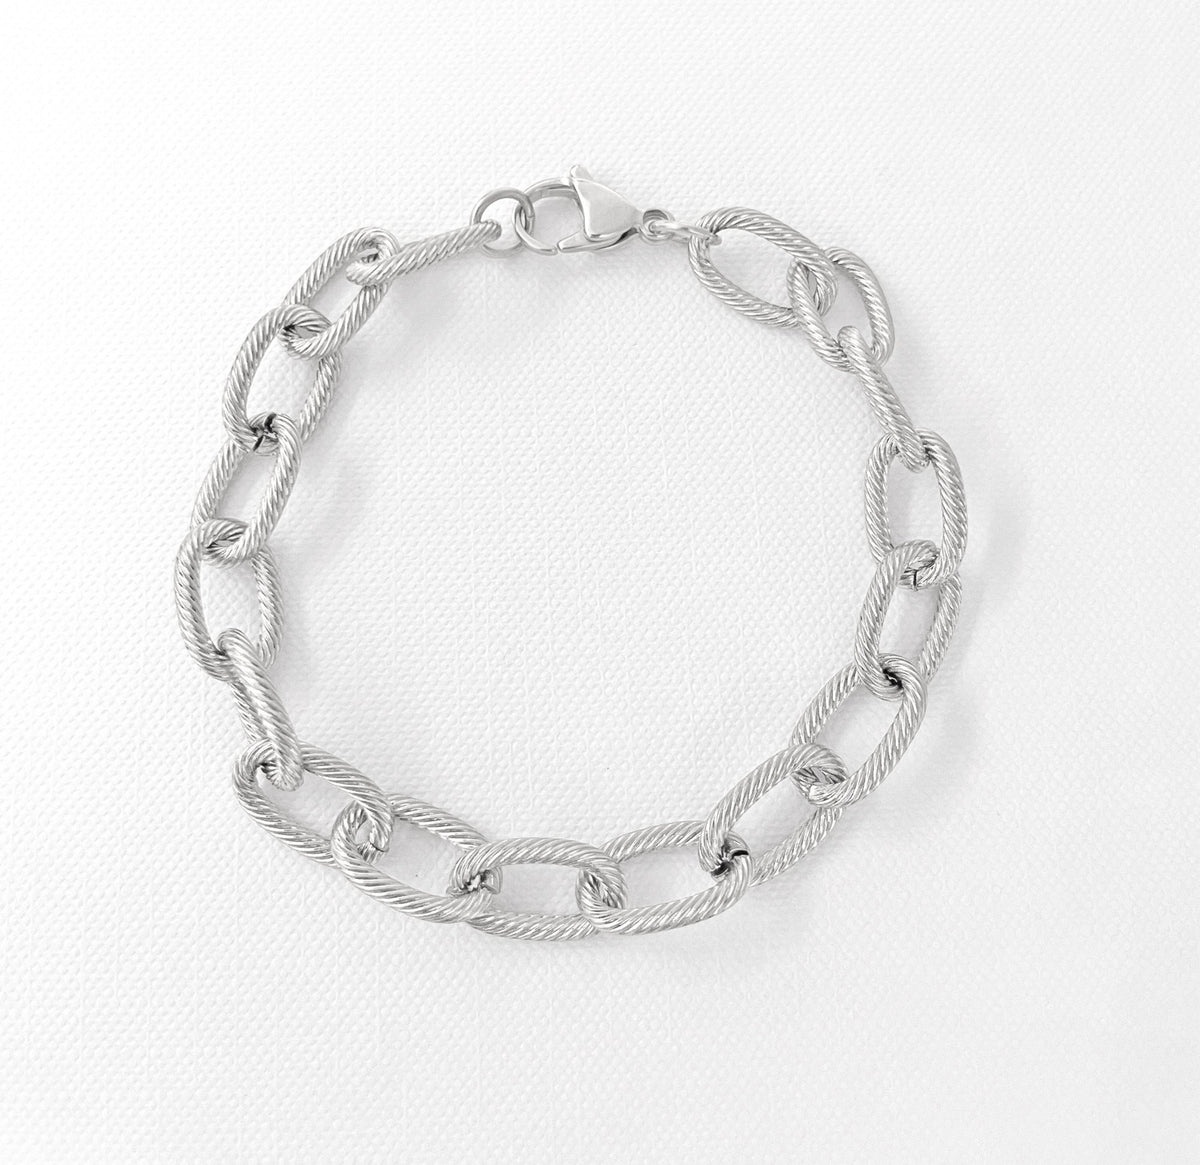 silver textured link chain bracelet waterproof jewelry